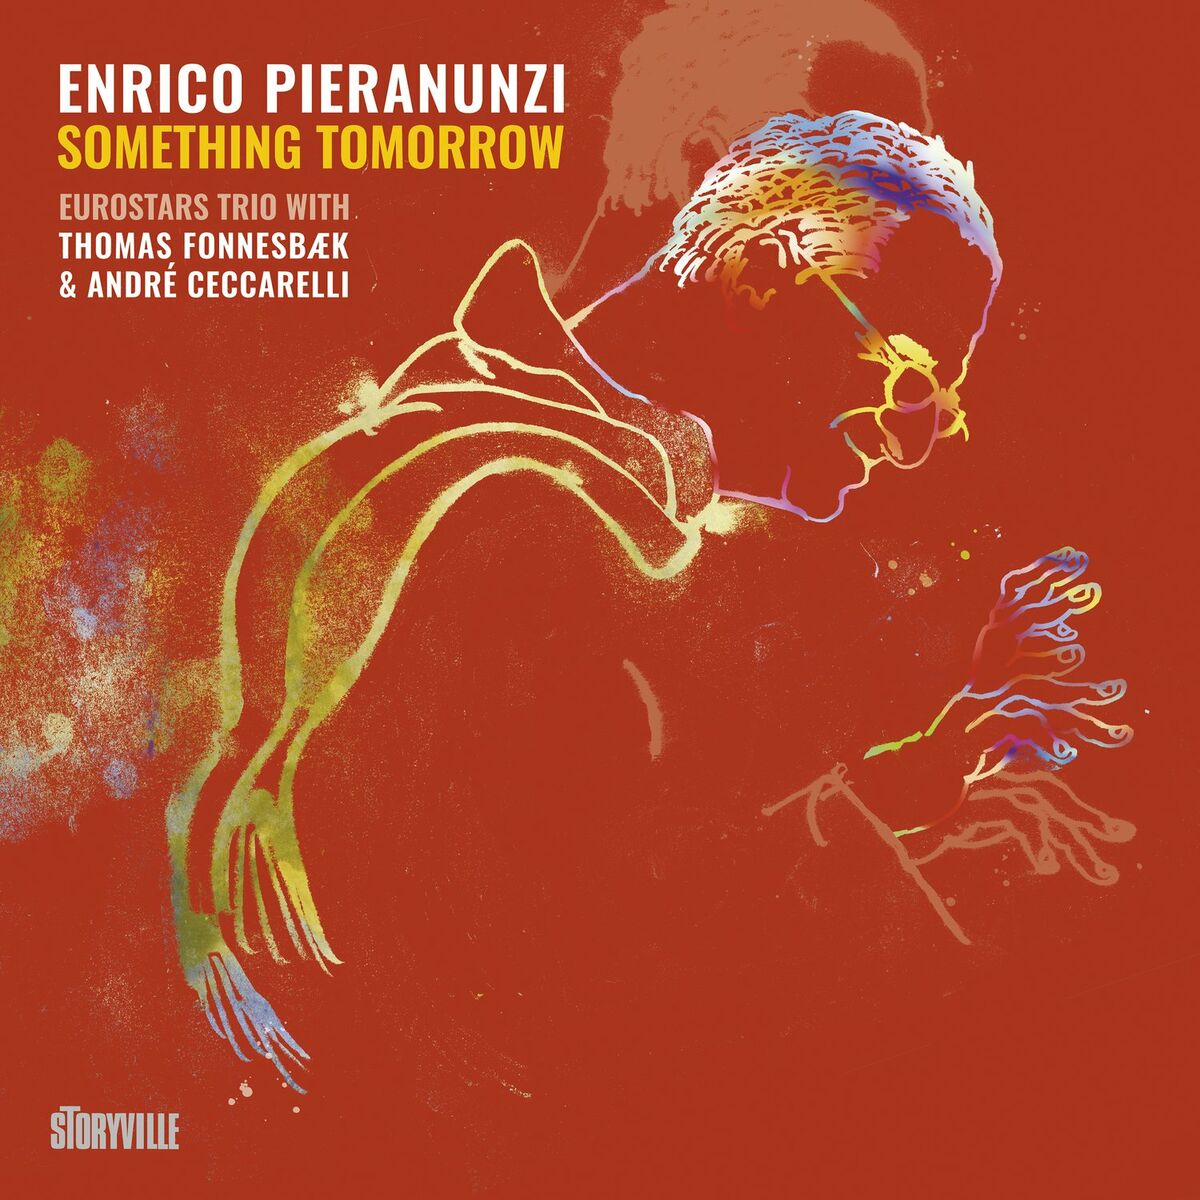 Enrico Pieranunzi: albums, songs, playlists | Listen on Deezer